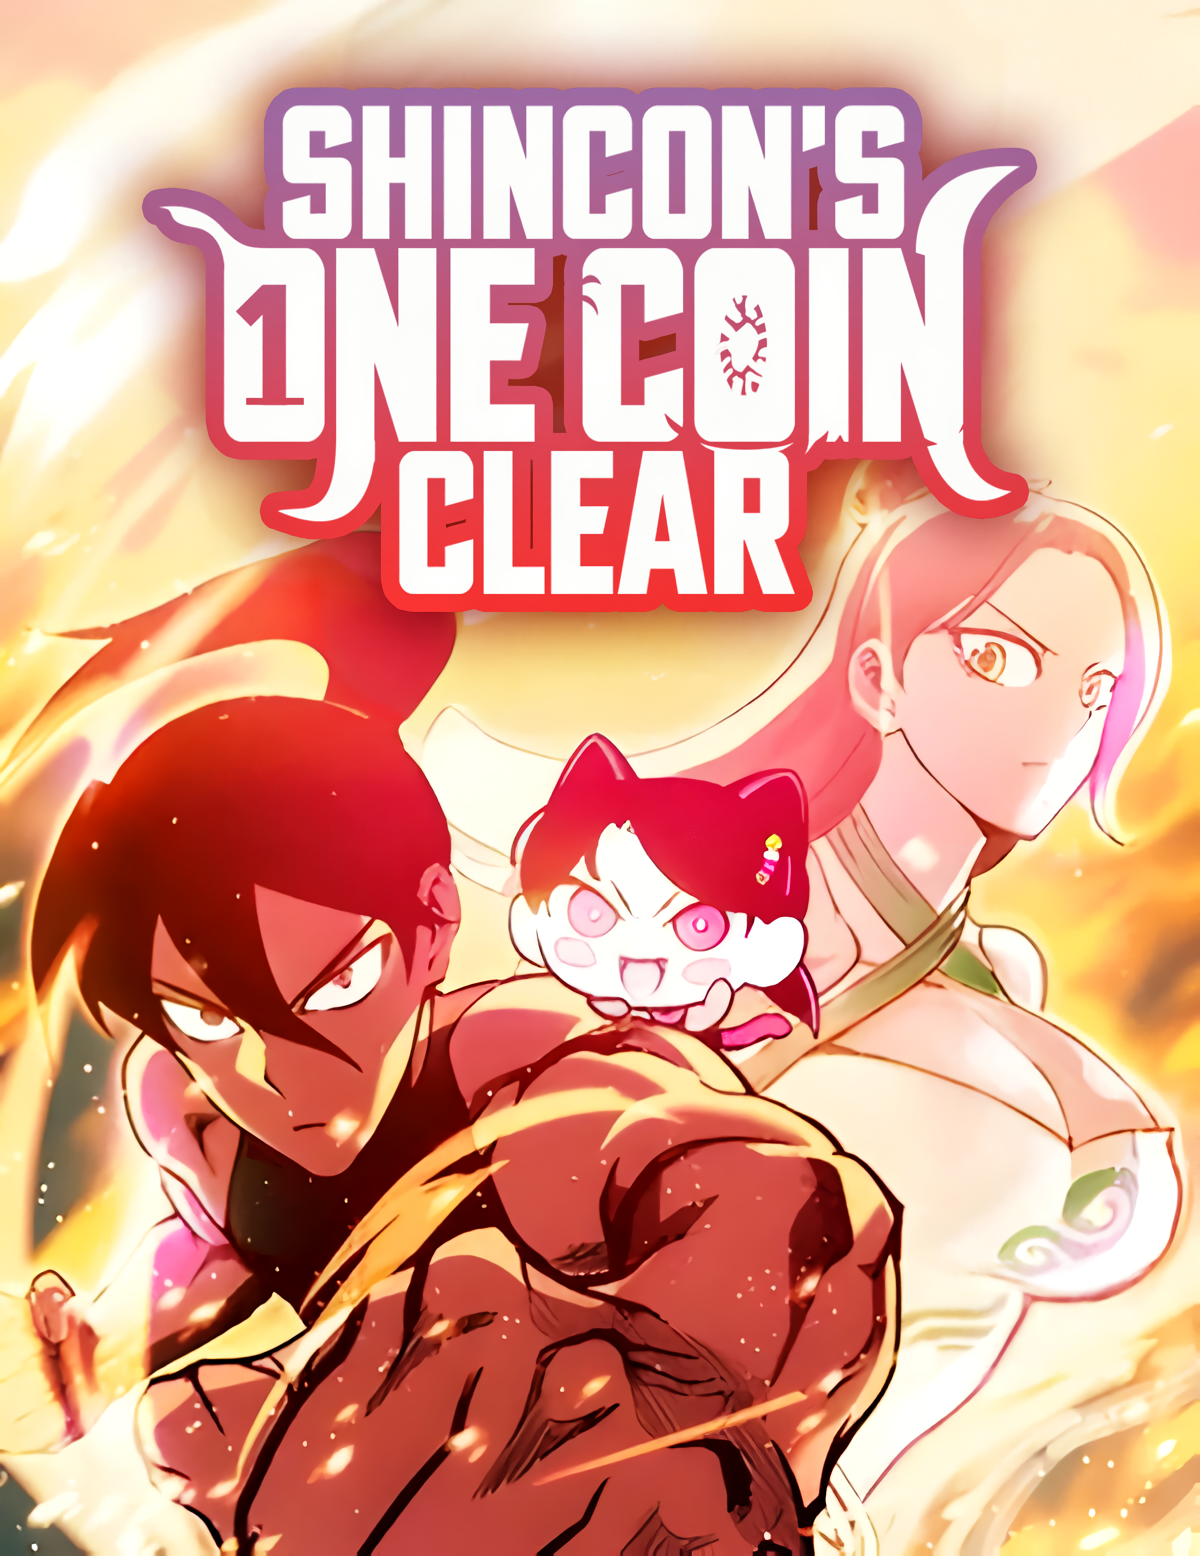 Shincon’s One Coin Clear